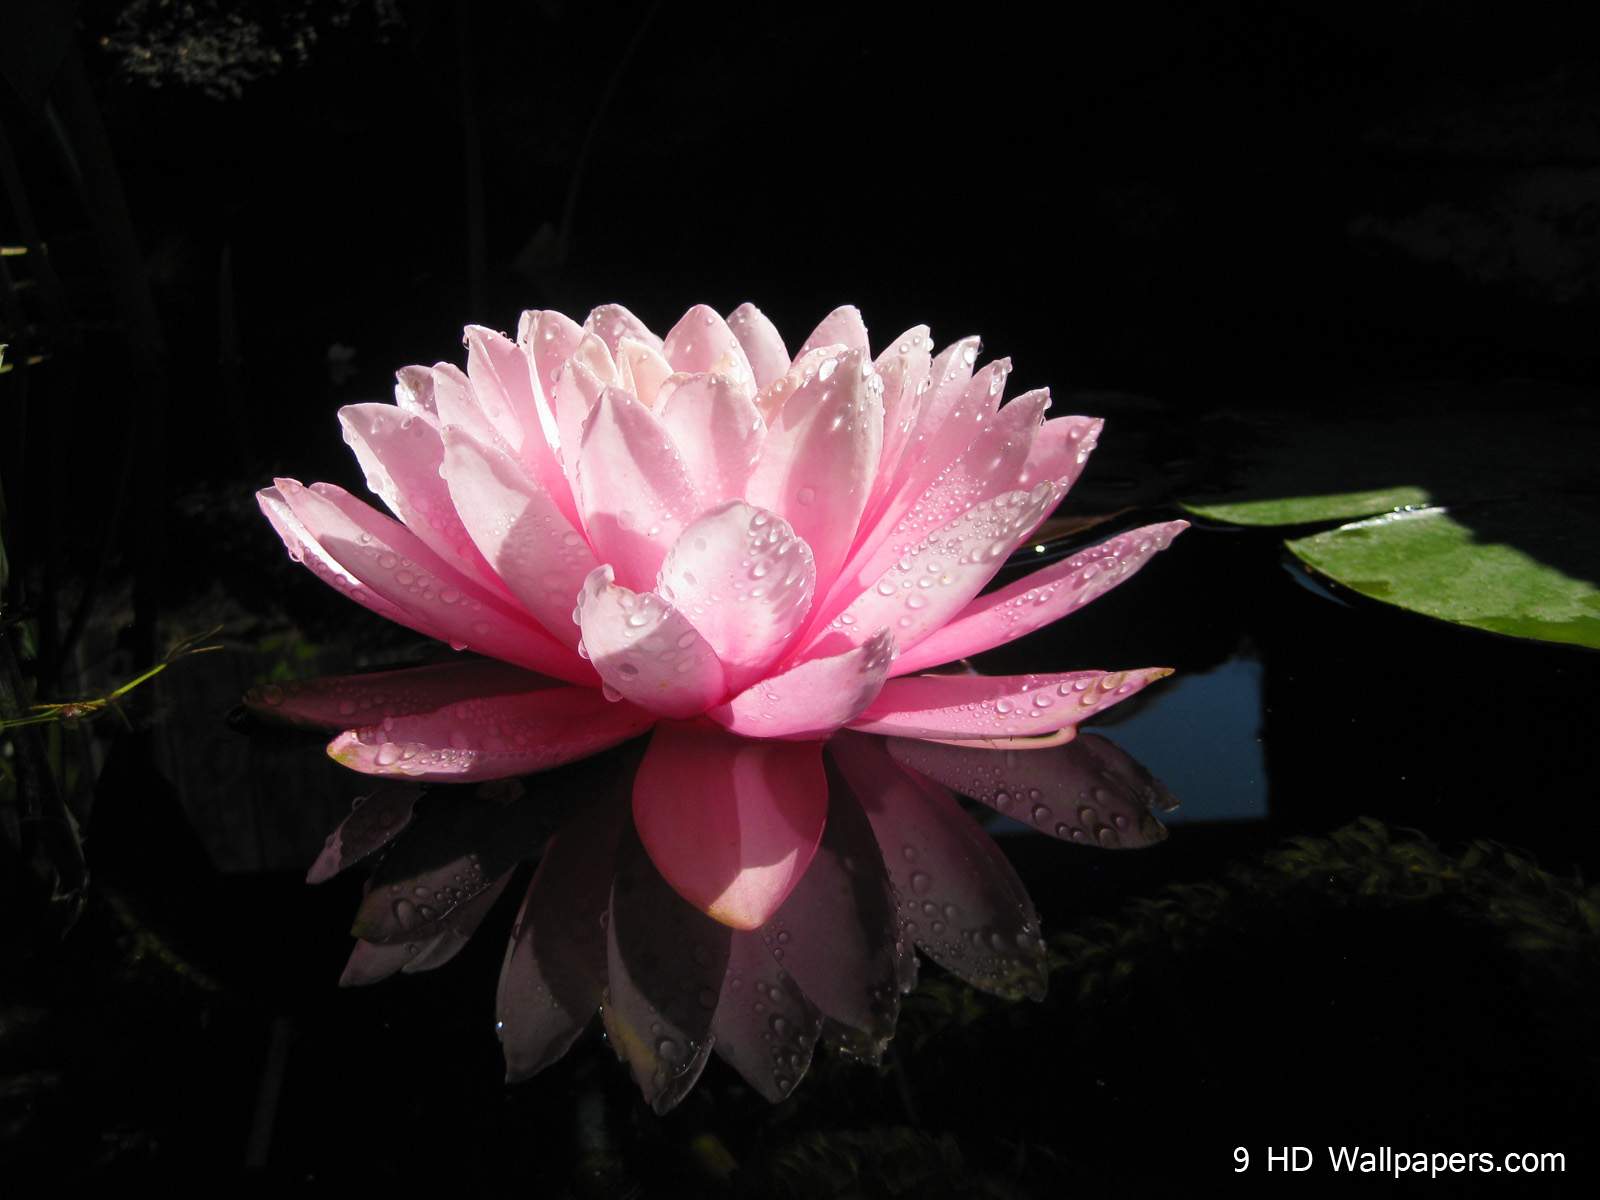 Pink lotus flower in front of green leaves 4K wallpaper download